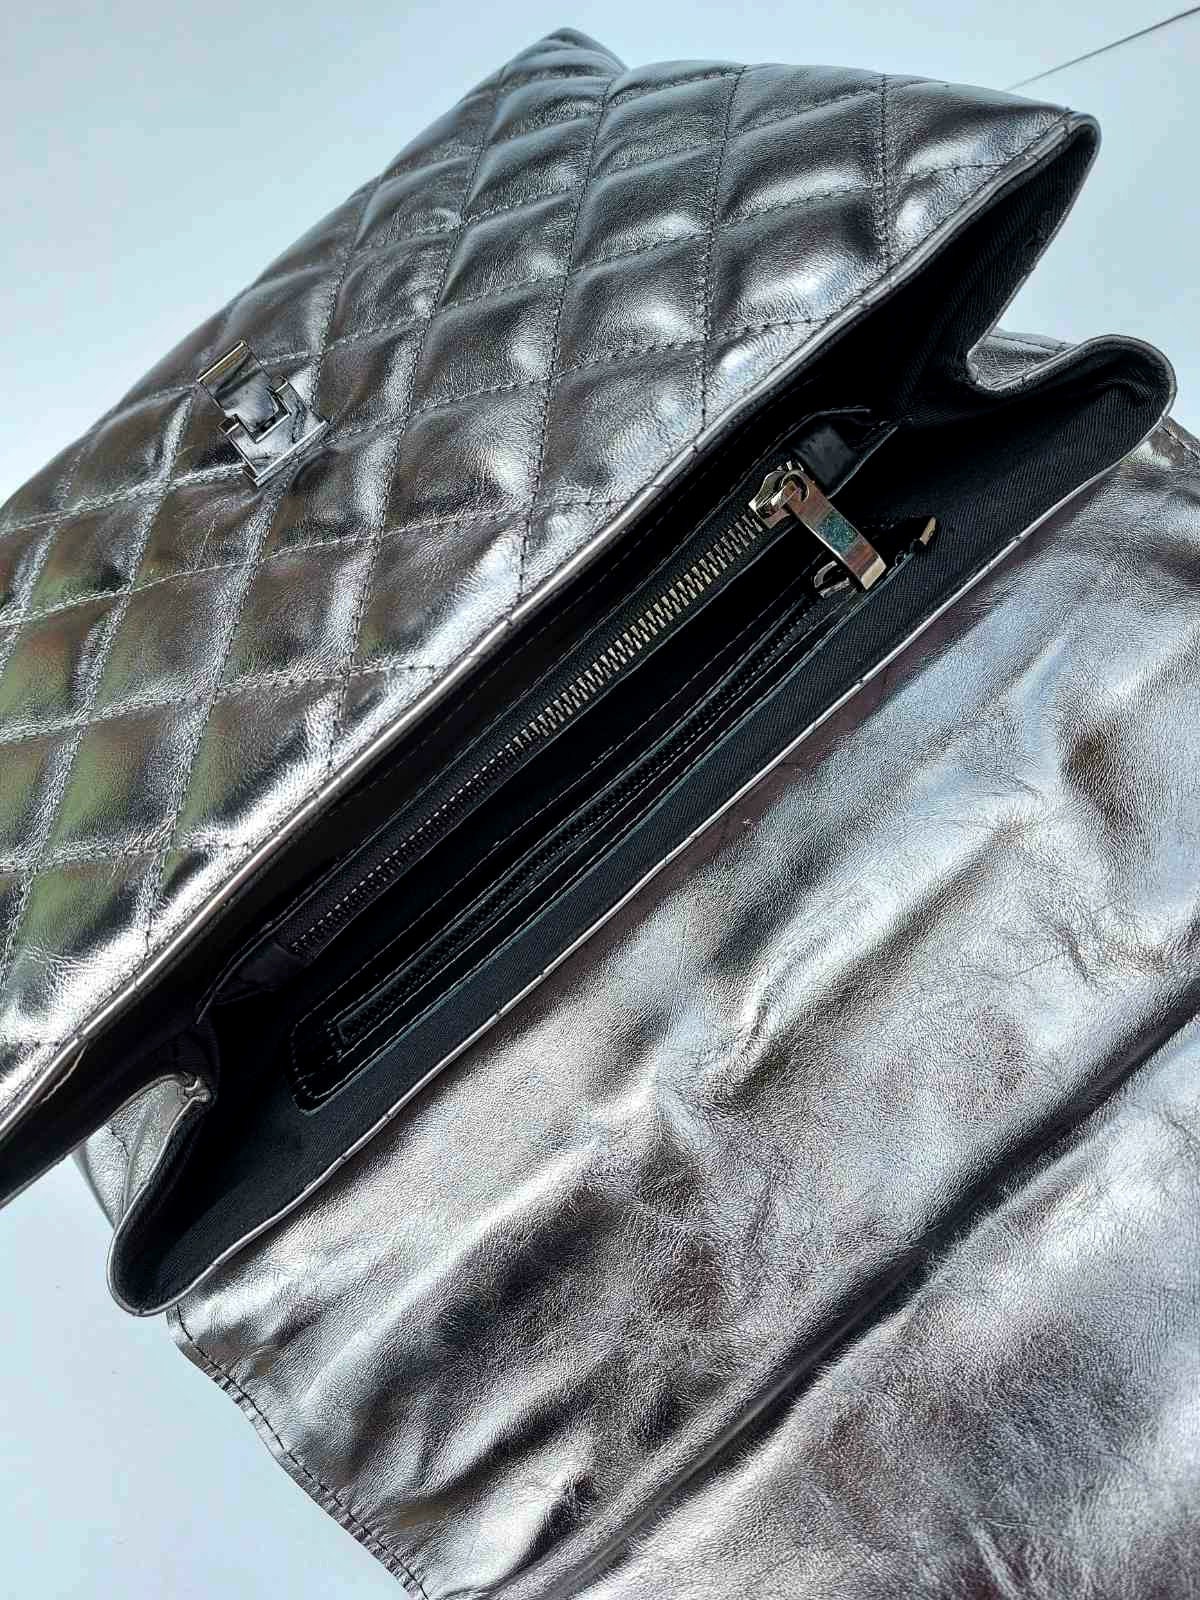 Classic Style Genuine Leather Flap Bag, Quilted Elegant Large Bag, Minimalist Top Handle Bag, Convertible Shoulder Bag, Timeless Fashion Bag